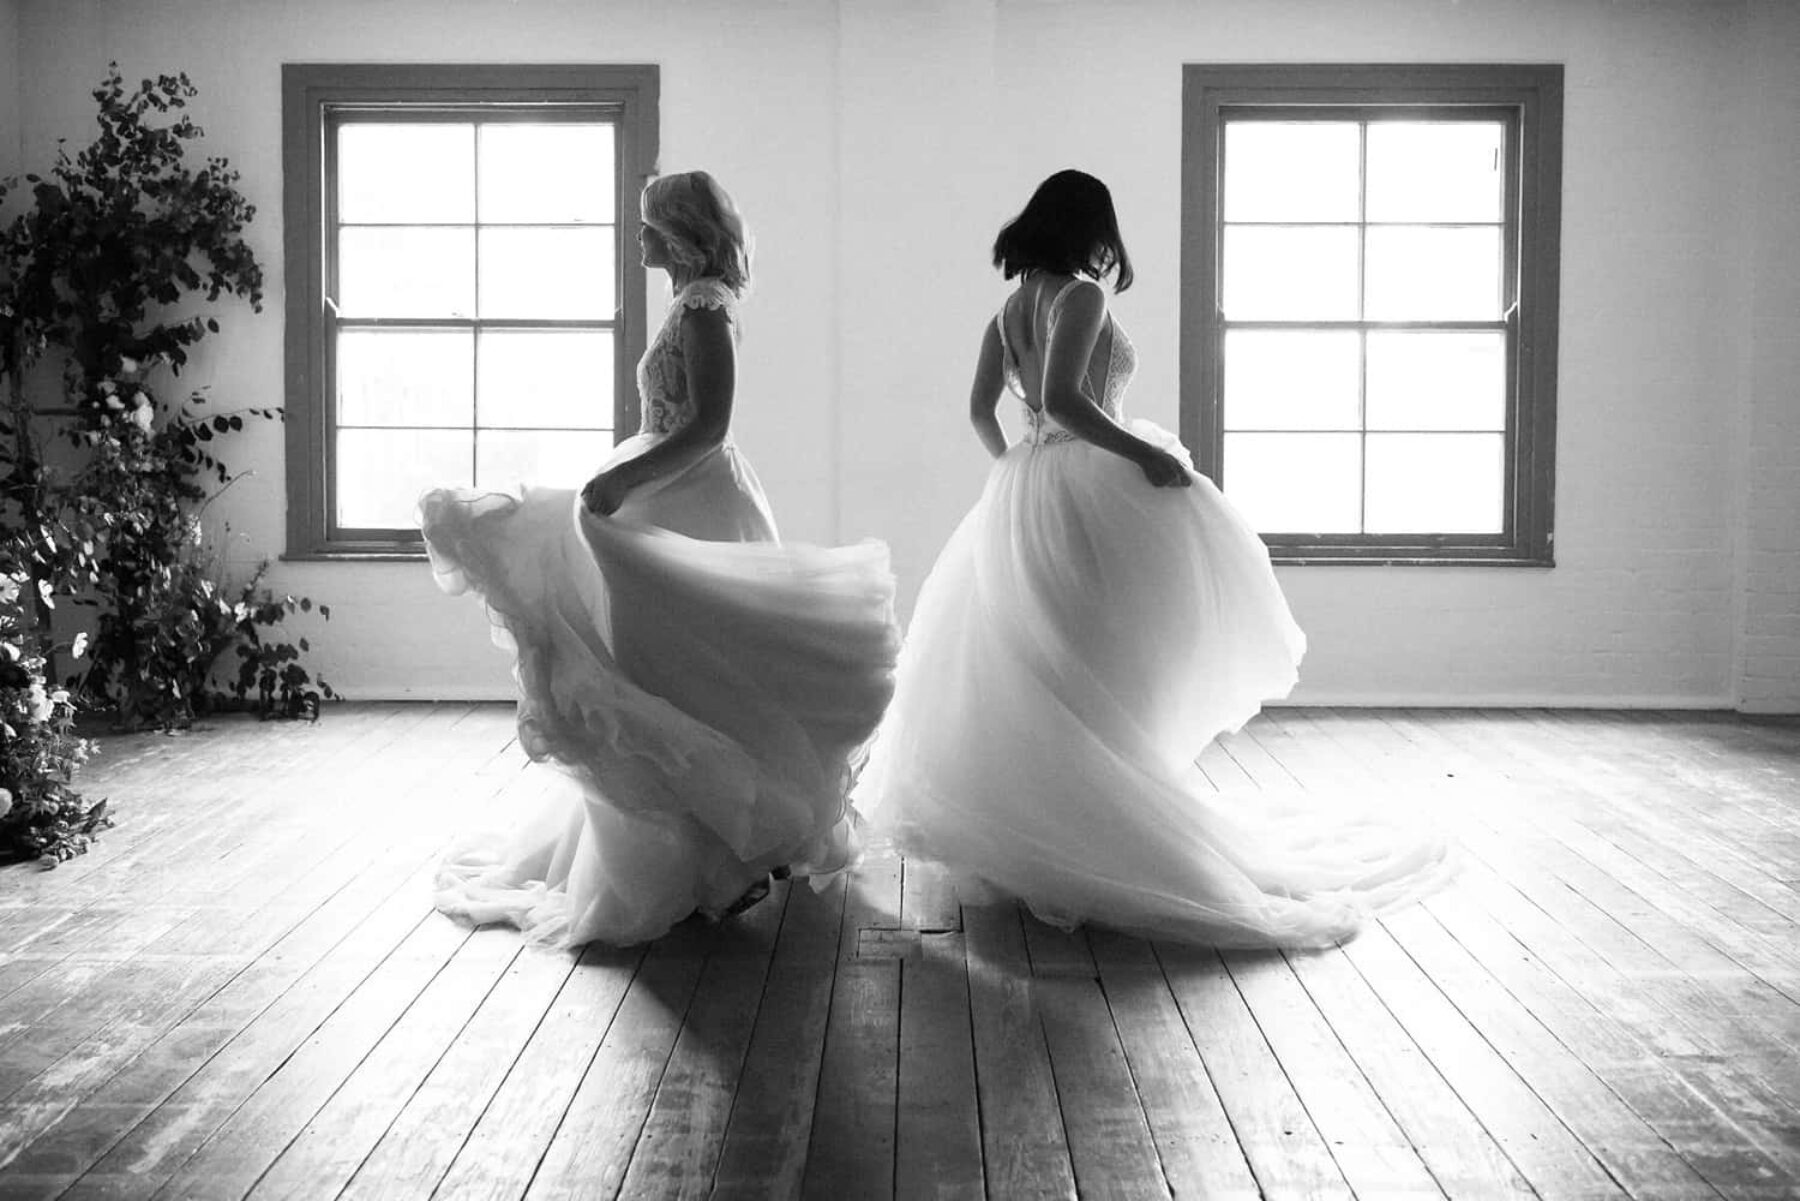 Brisbane bridal boutique - White Lily Couture